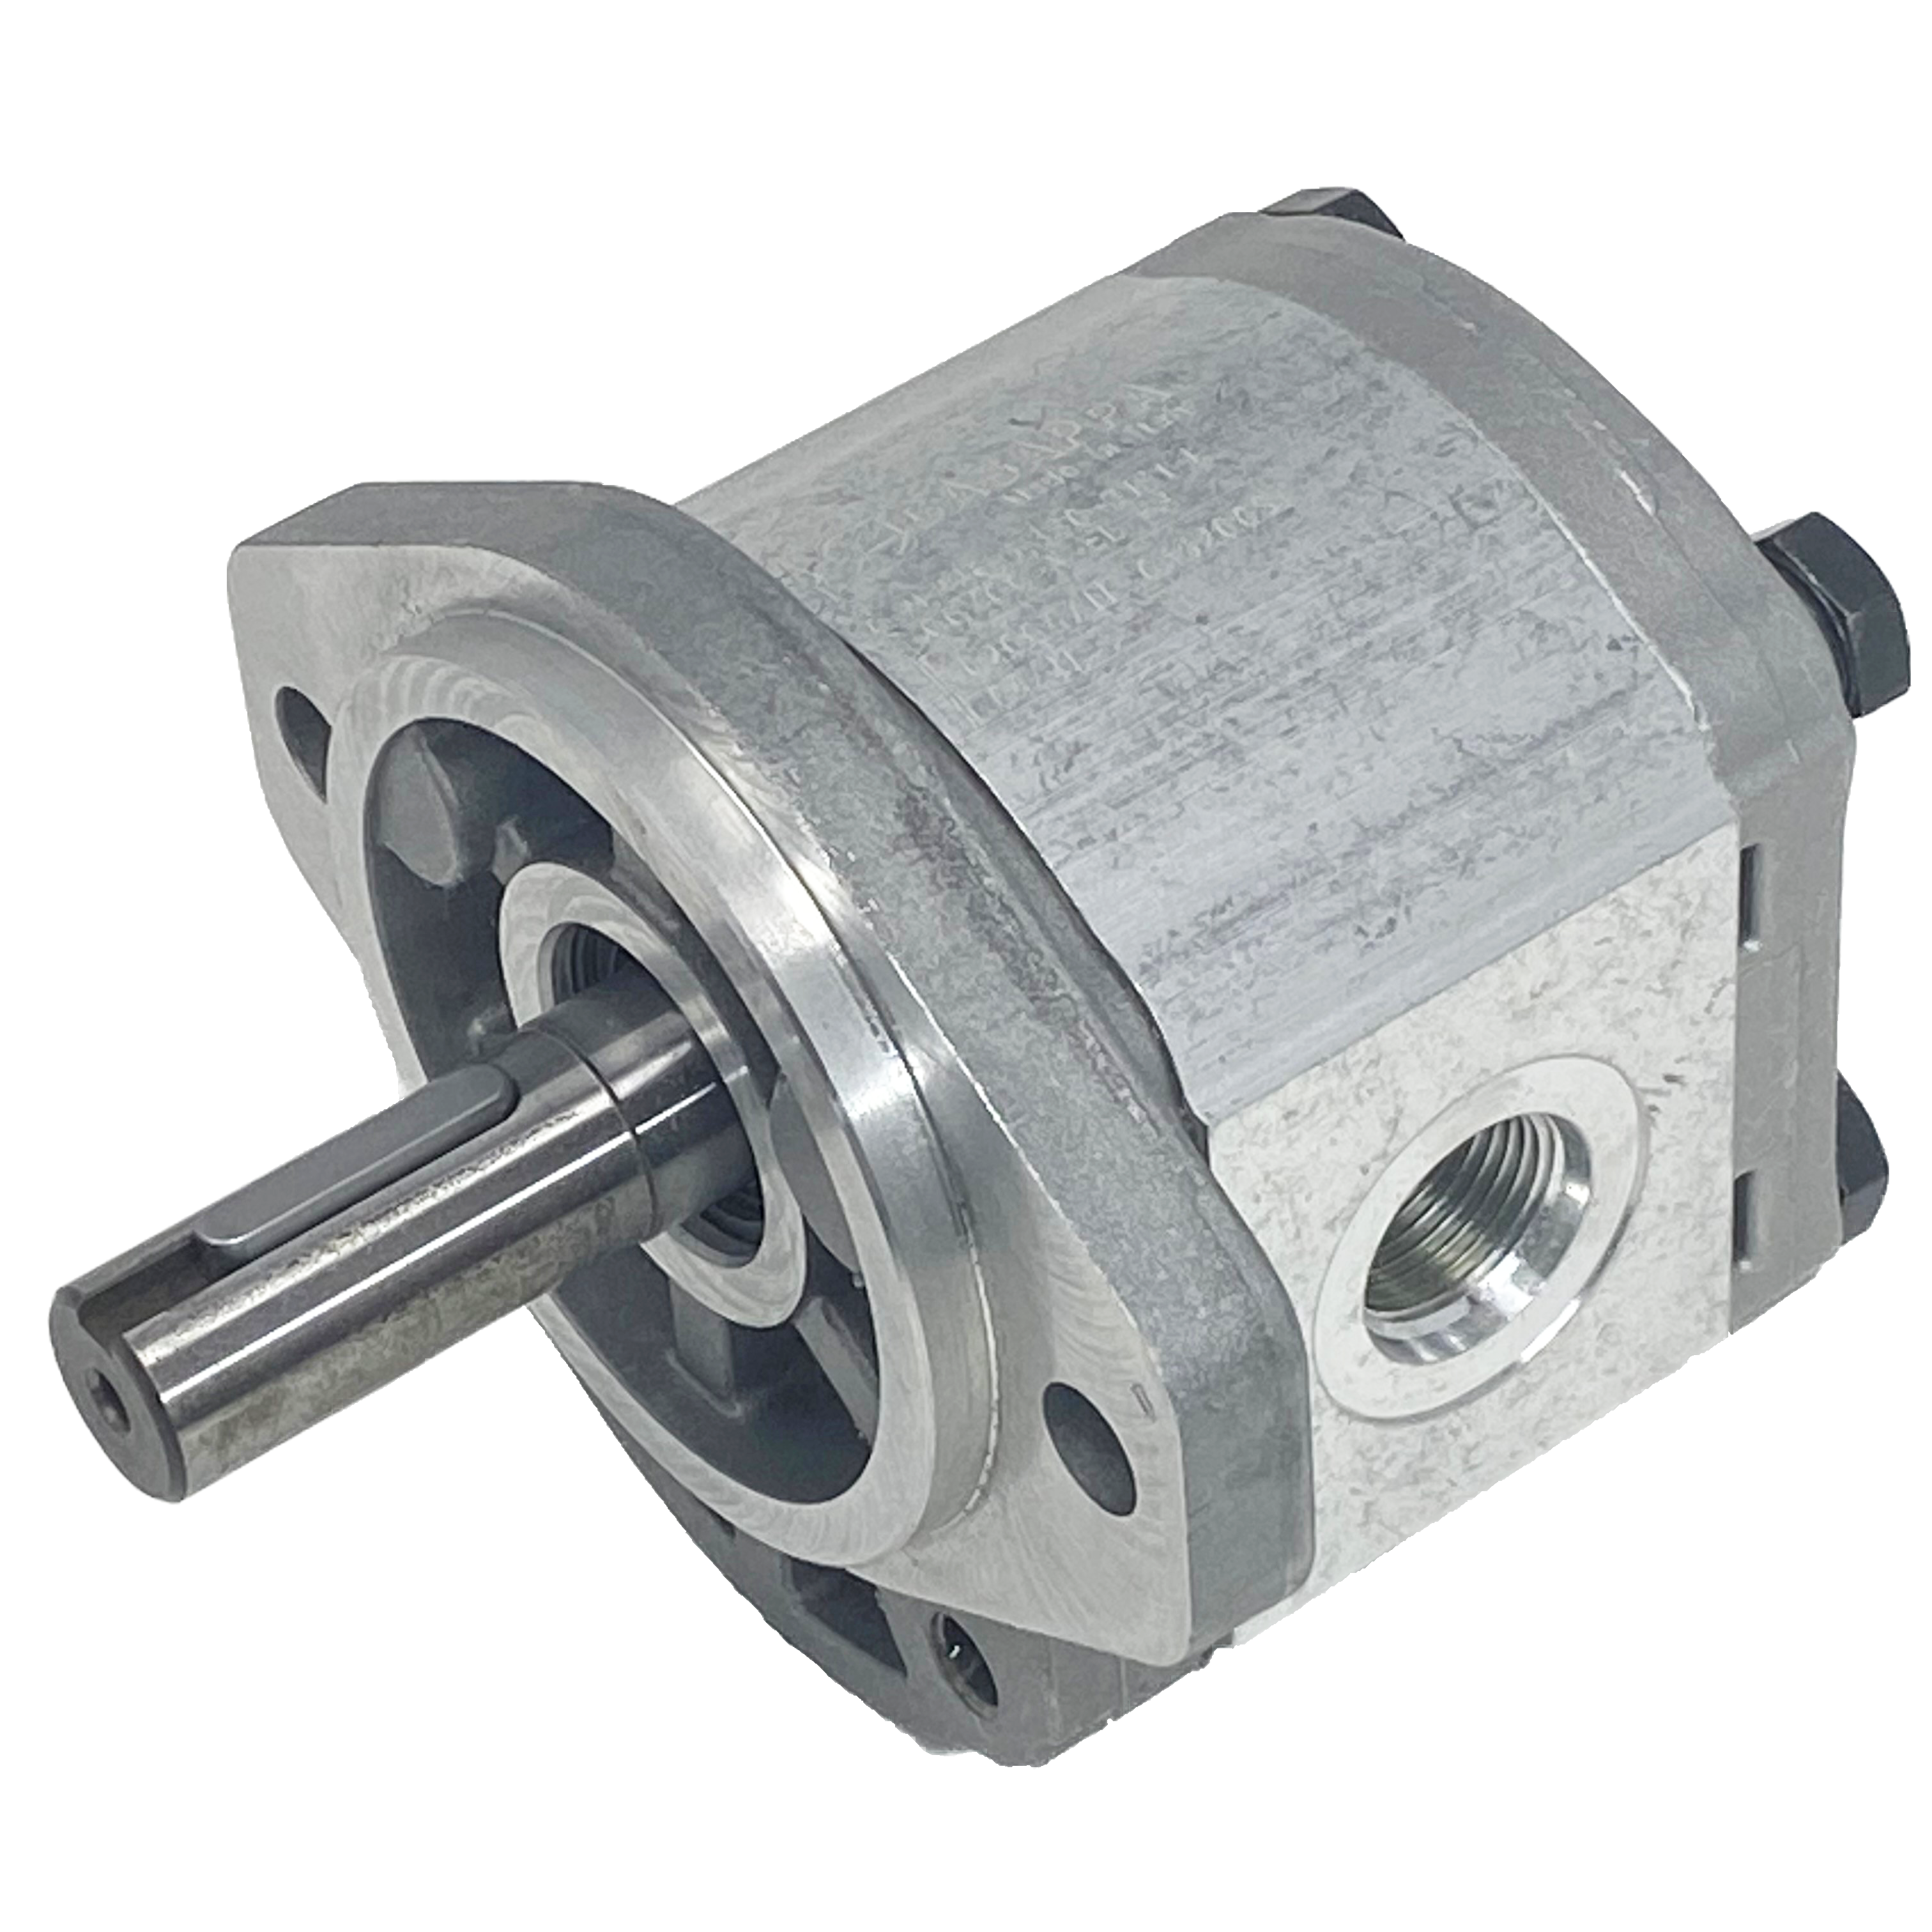 PLM20.9B0-49S1-LOC/OC-N-EL : Casappa Polaris Gear Motor, 9.17cc, 3625psi Rated, 3500RPM, Reversible Interior Drain, 3/4" Bore x 3/16" Key Shaft, SAE A 2-Bolt Flange, 0.625 (5/8") #10 SAE Inlet, 0.625 (5/8") #10 SAE Outlet, Aluminum Body & Flange